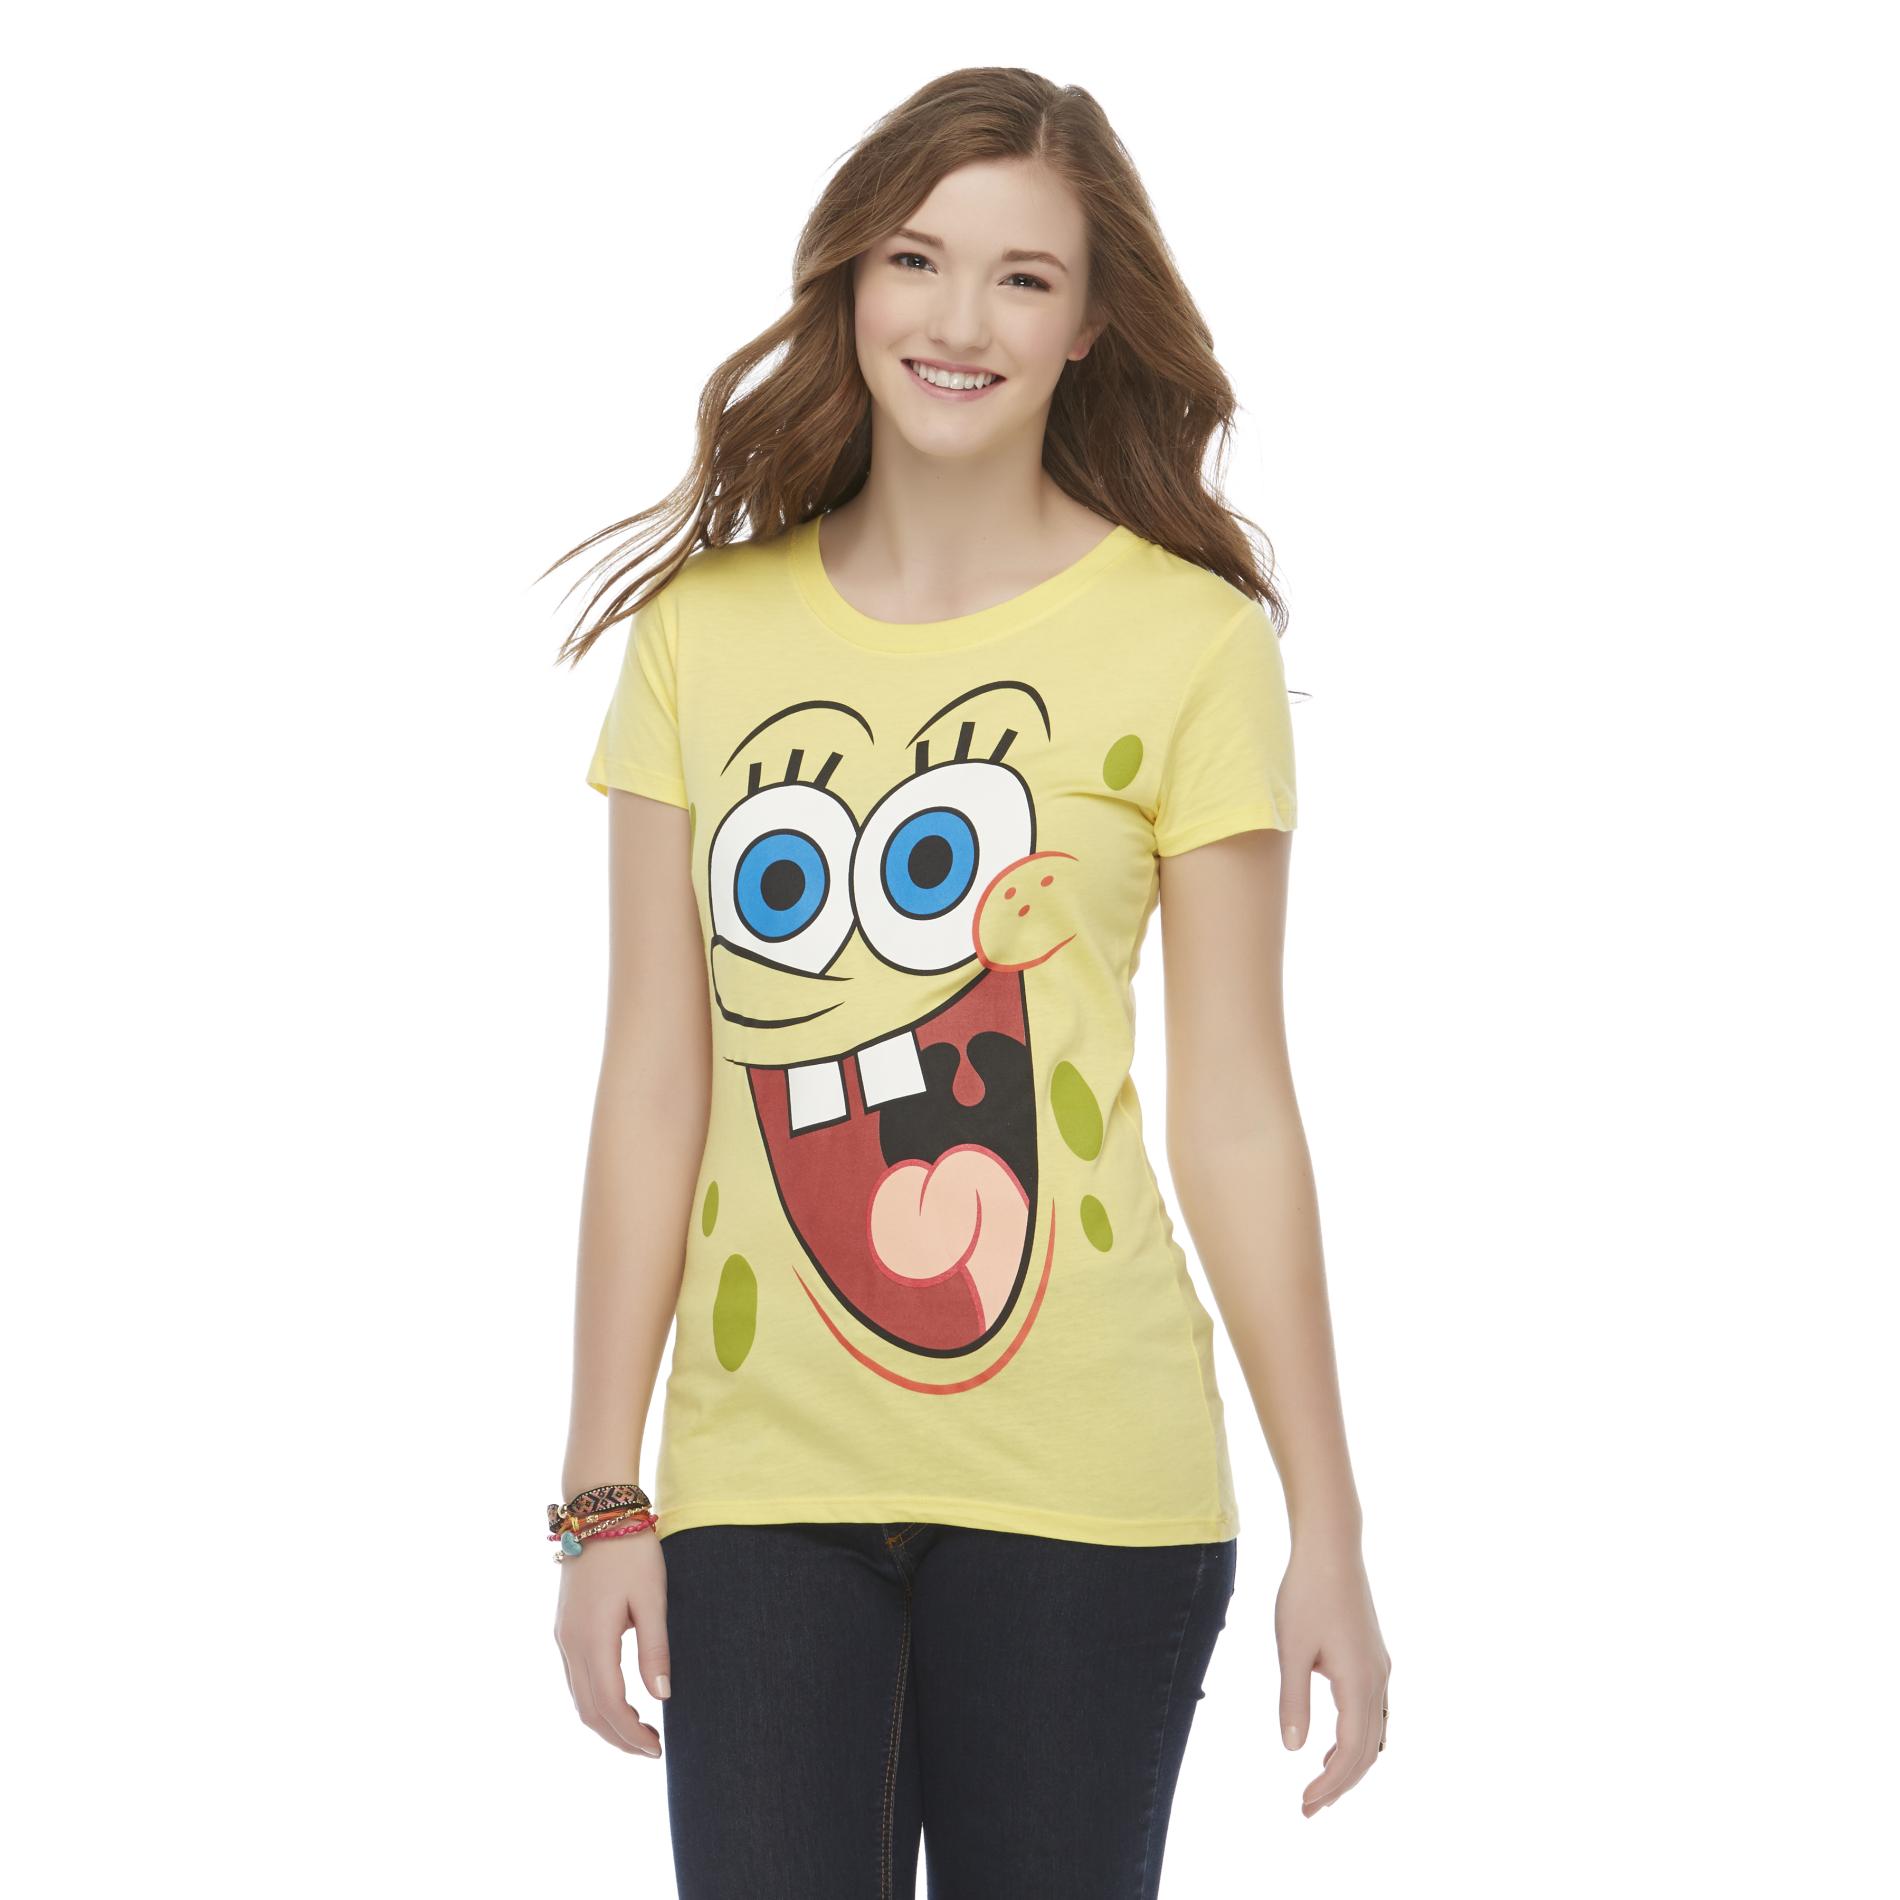 Nickelodeon SpongeBob SquarePants Junior's Graphic T-Shirt